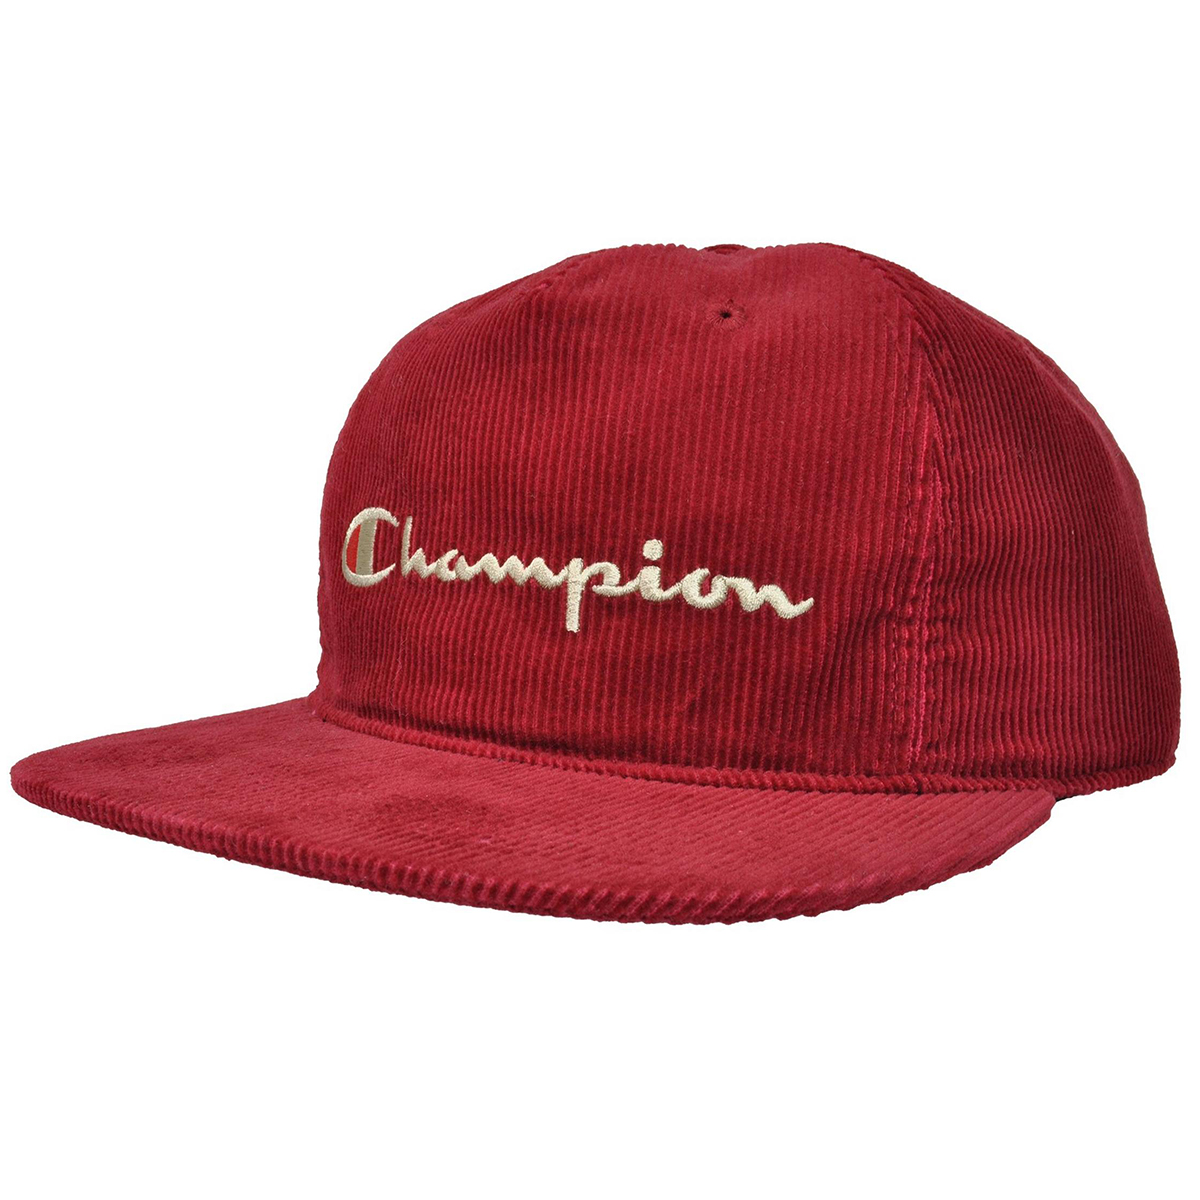 MILO CHAMPION CODUROY CAP-